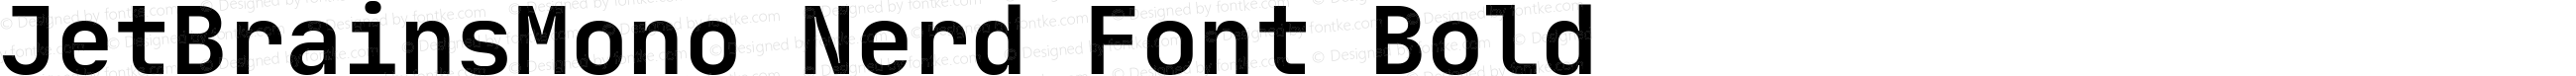 JetBrains Mono Bold Nerd Font Complete